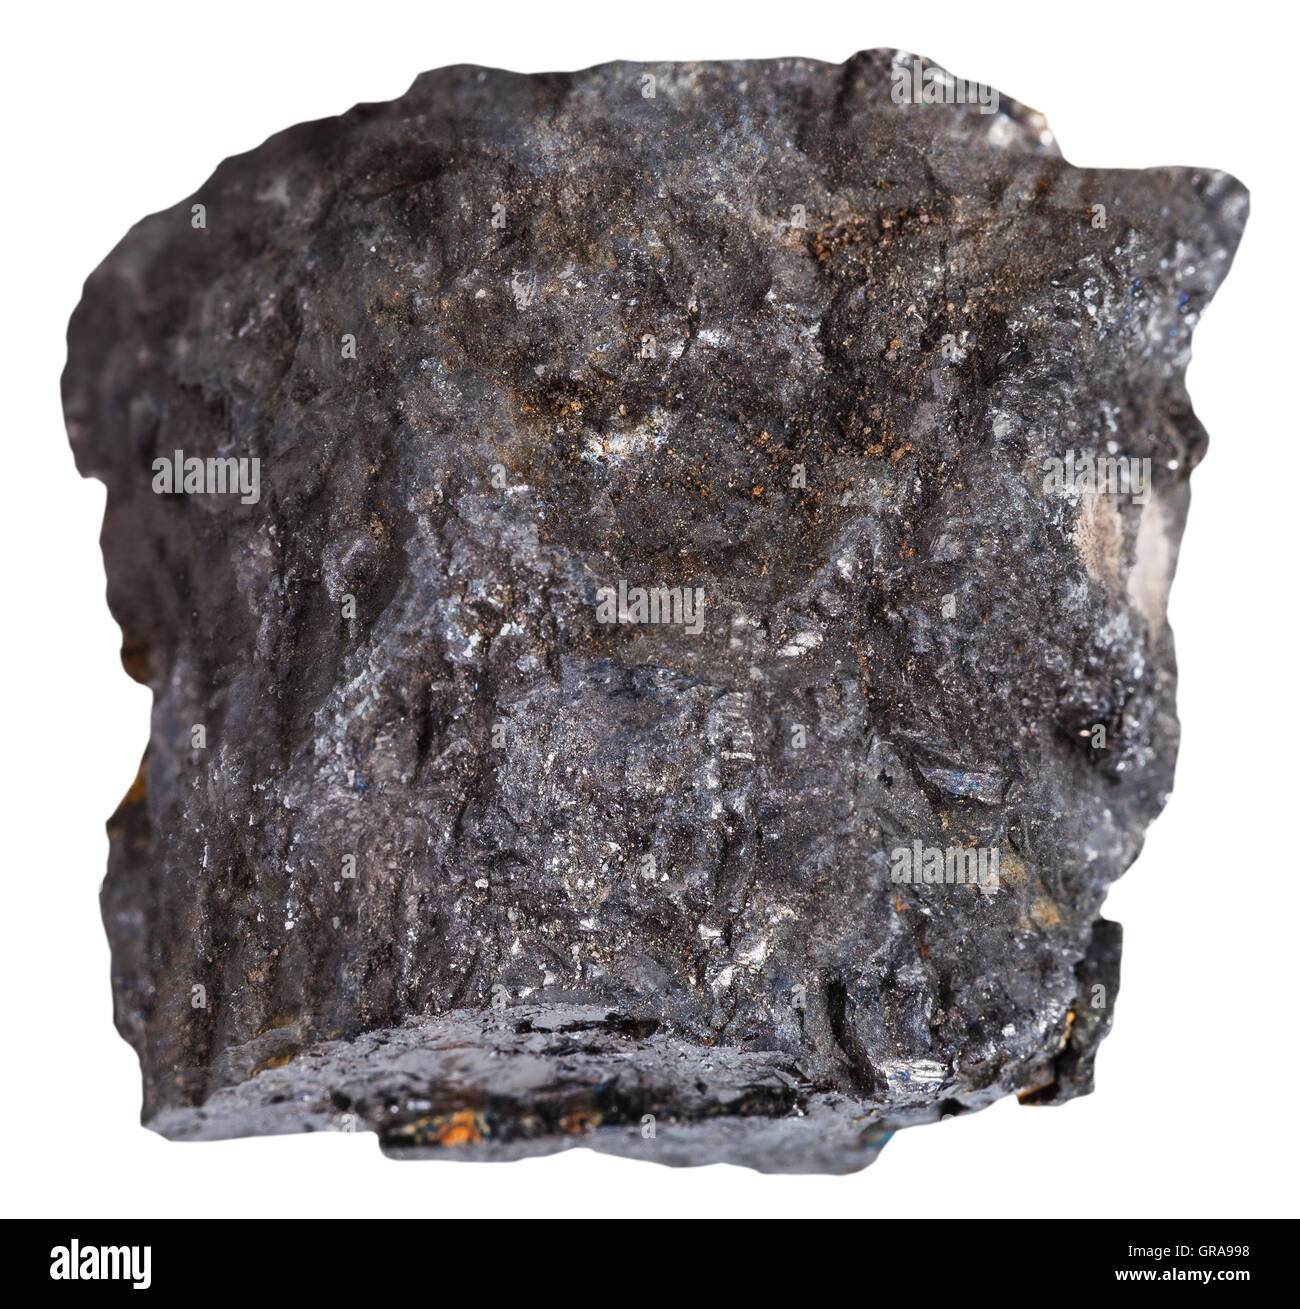 sedimentary rocks coal